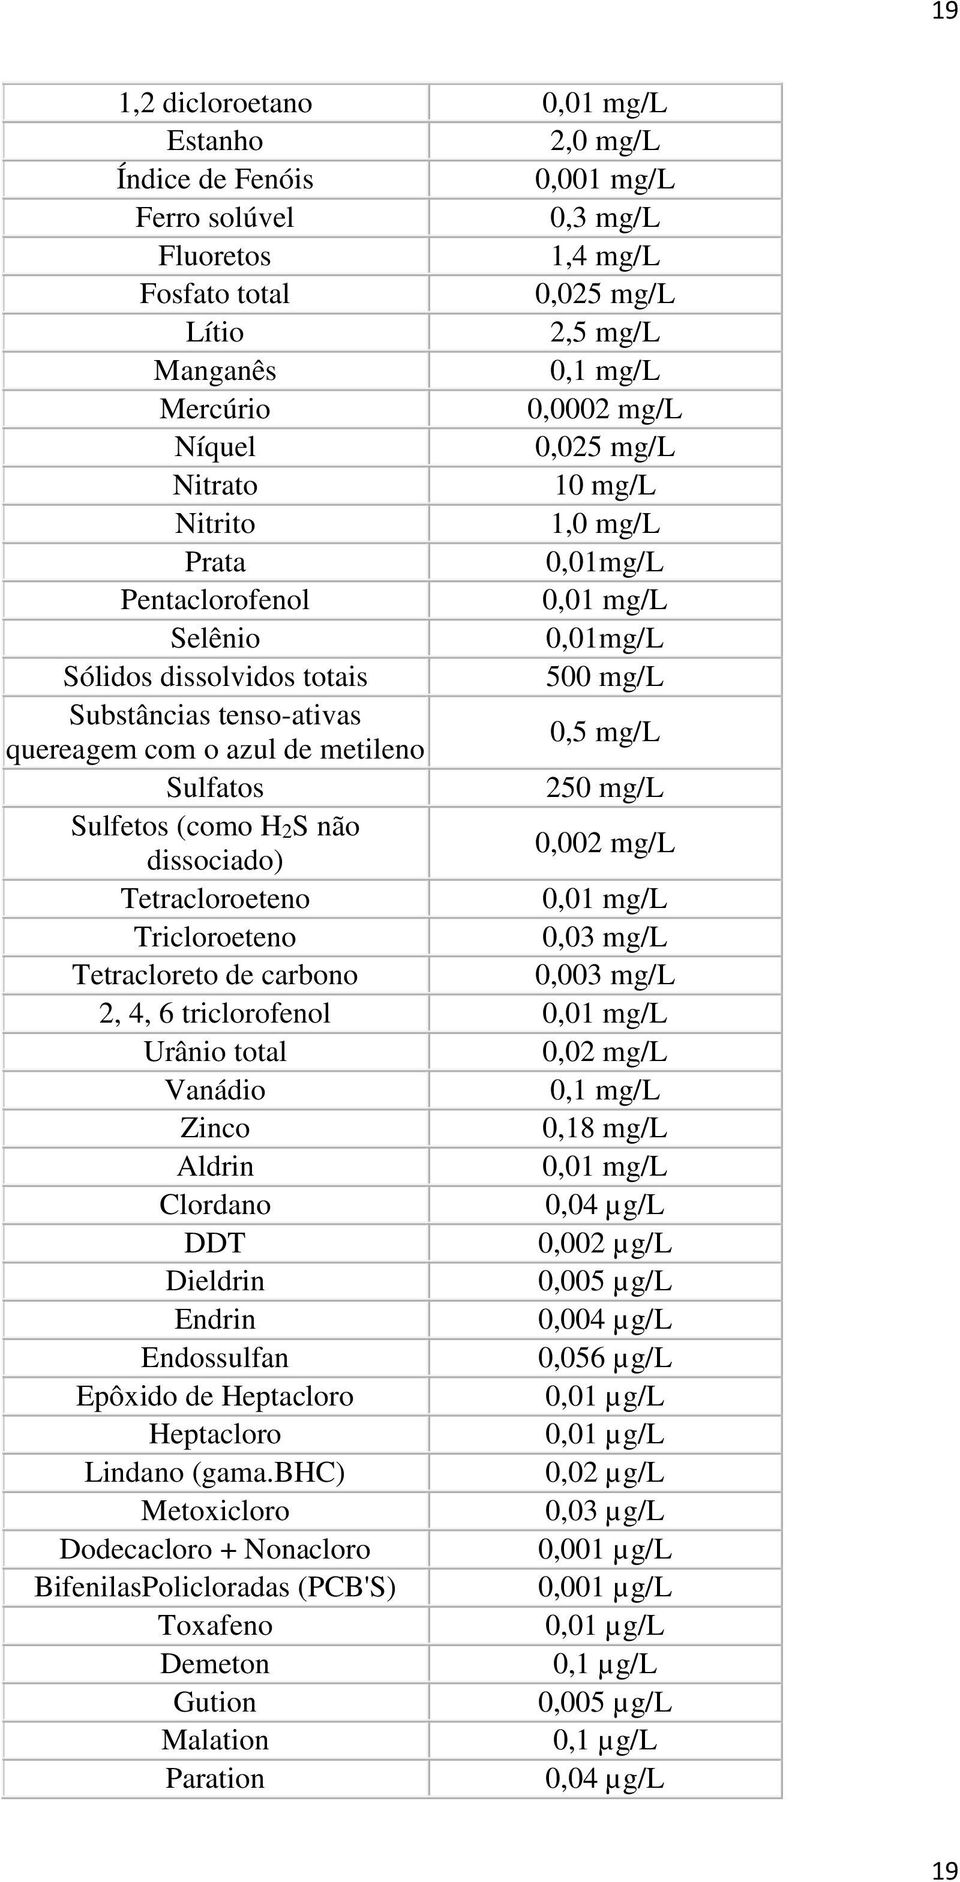 metileno 0,5 mg/l Sulfatos 250 mg/l Sulfetos (como H2S não dissociado) 0,002 mg/l Tetracloroeteno 0,01 mg/l Tricloroeteno 0,03 mg/l Tetracloreto de carbono 0,003 mg/l 2, 4, 6 triclorofenol 0,01 mg/l